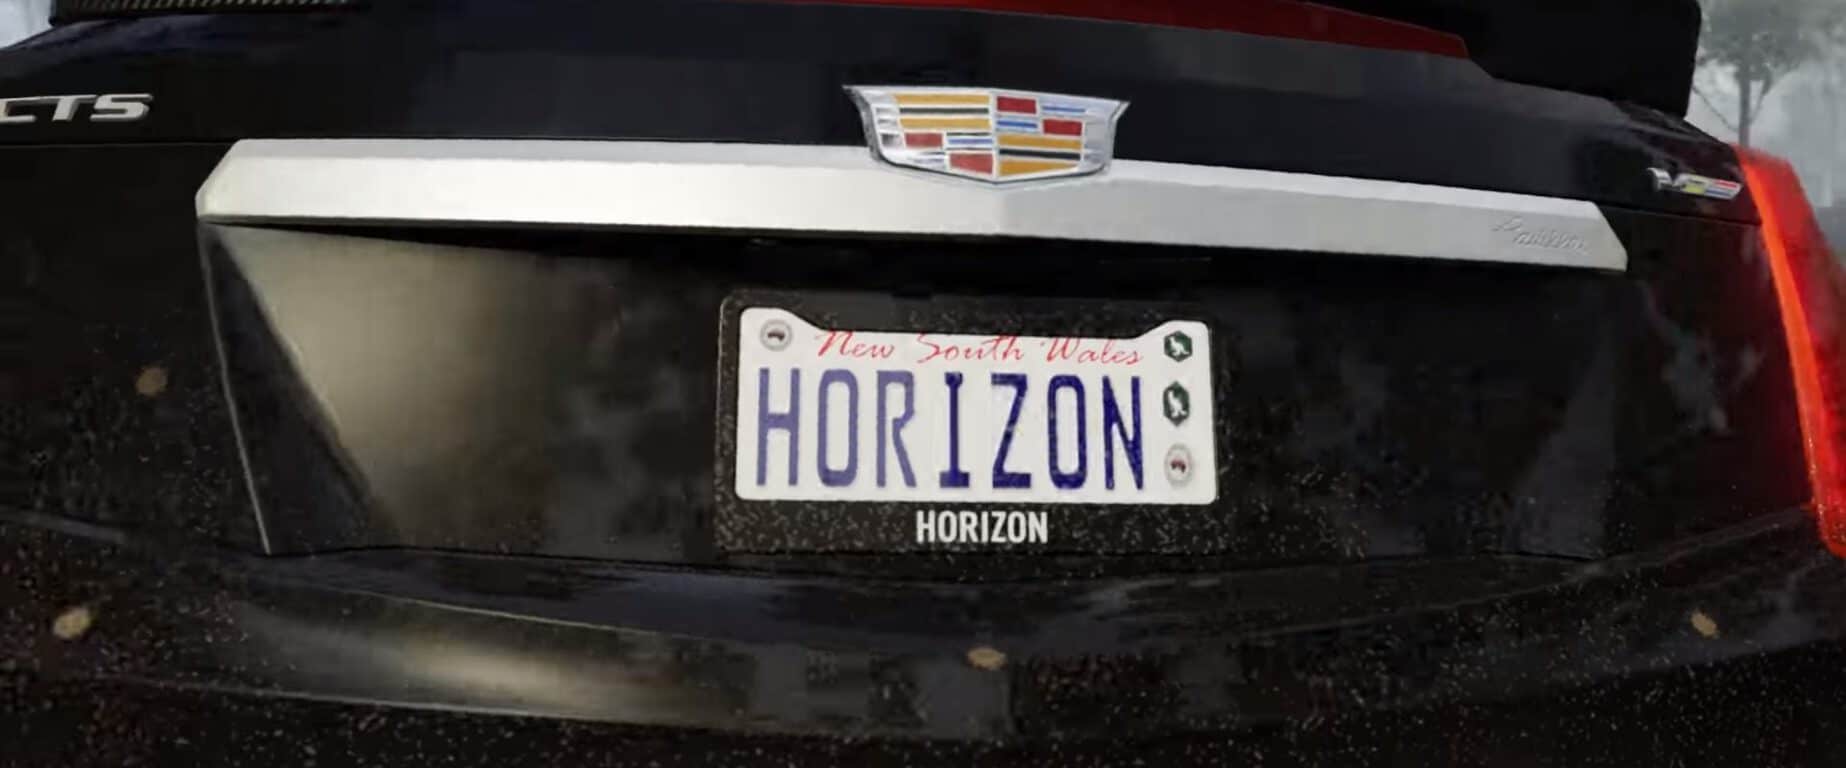 Forza Horizon 3 is now Xbox One X enhanced - OnMSFT.com - January 15, 2018